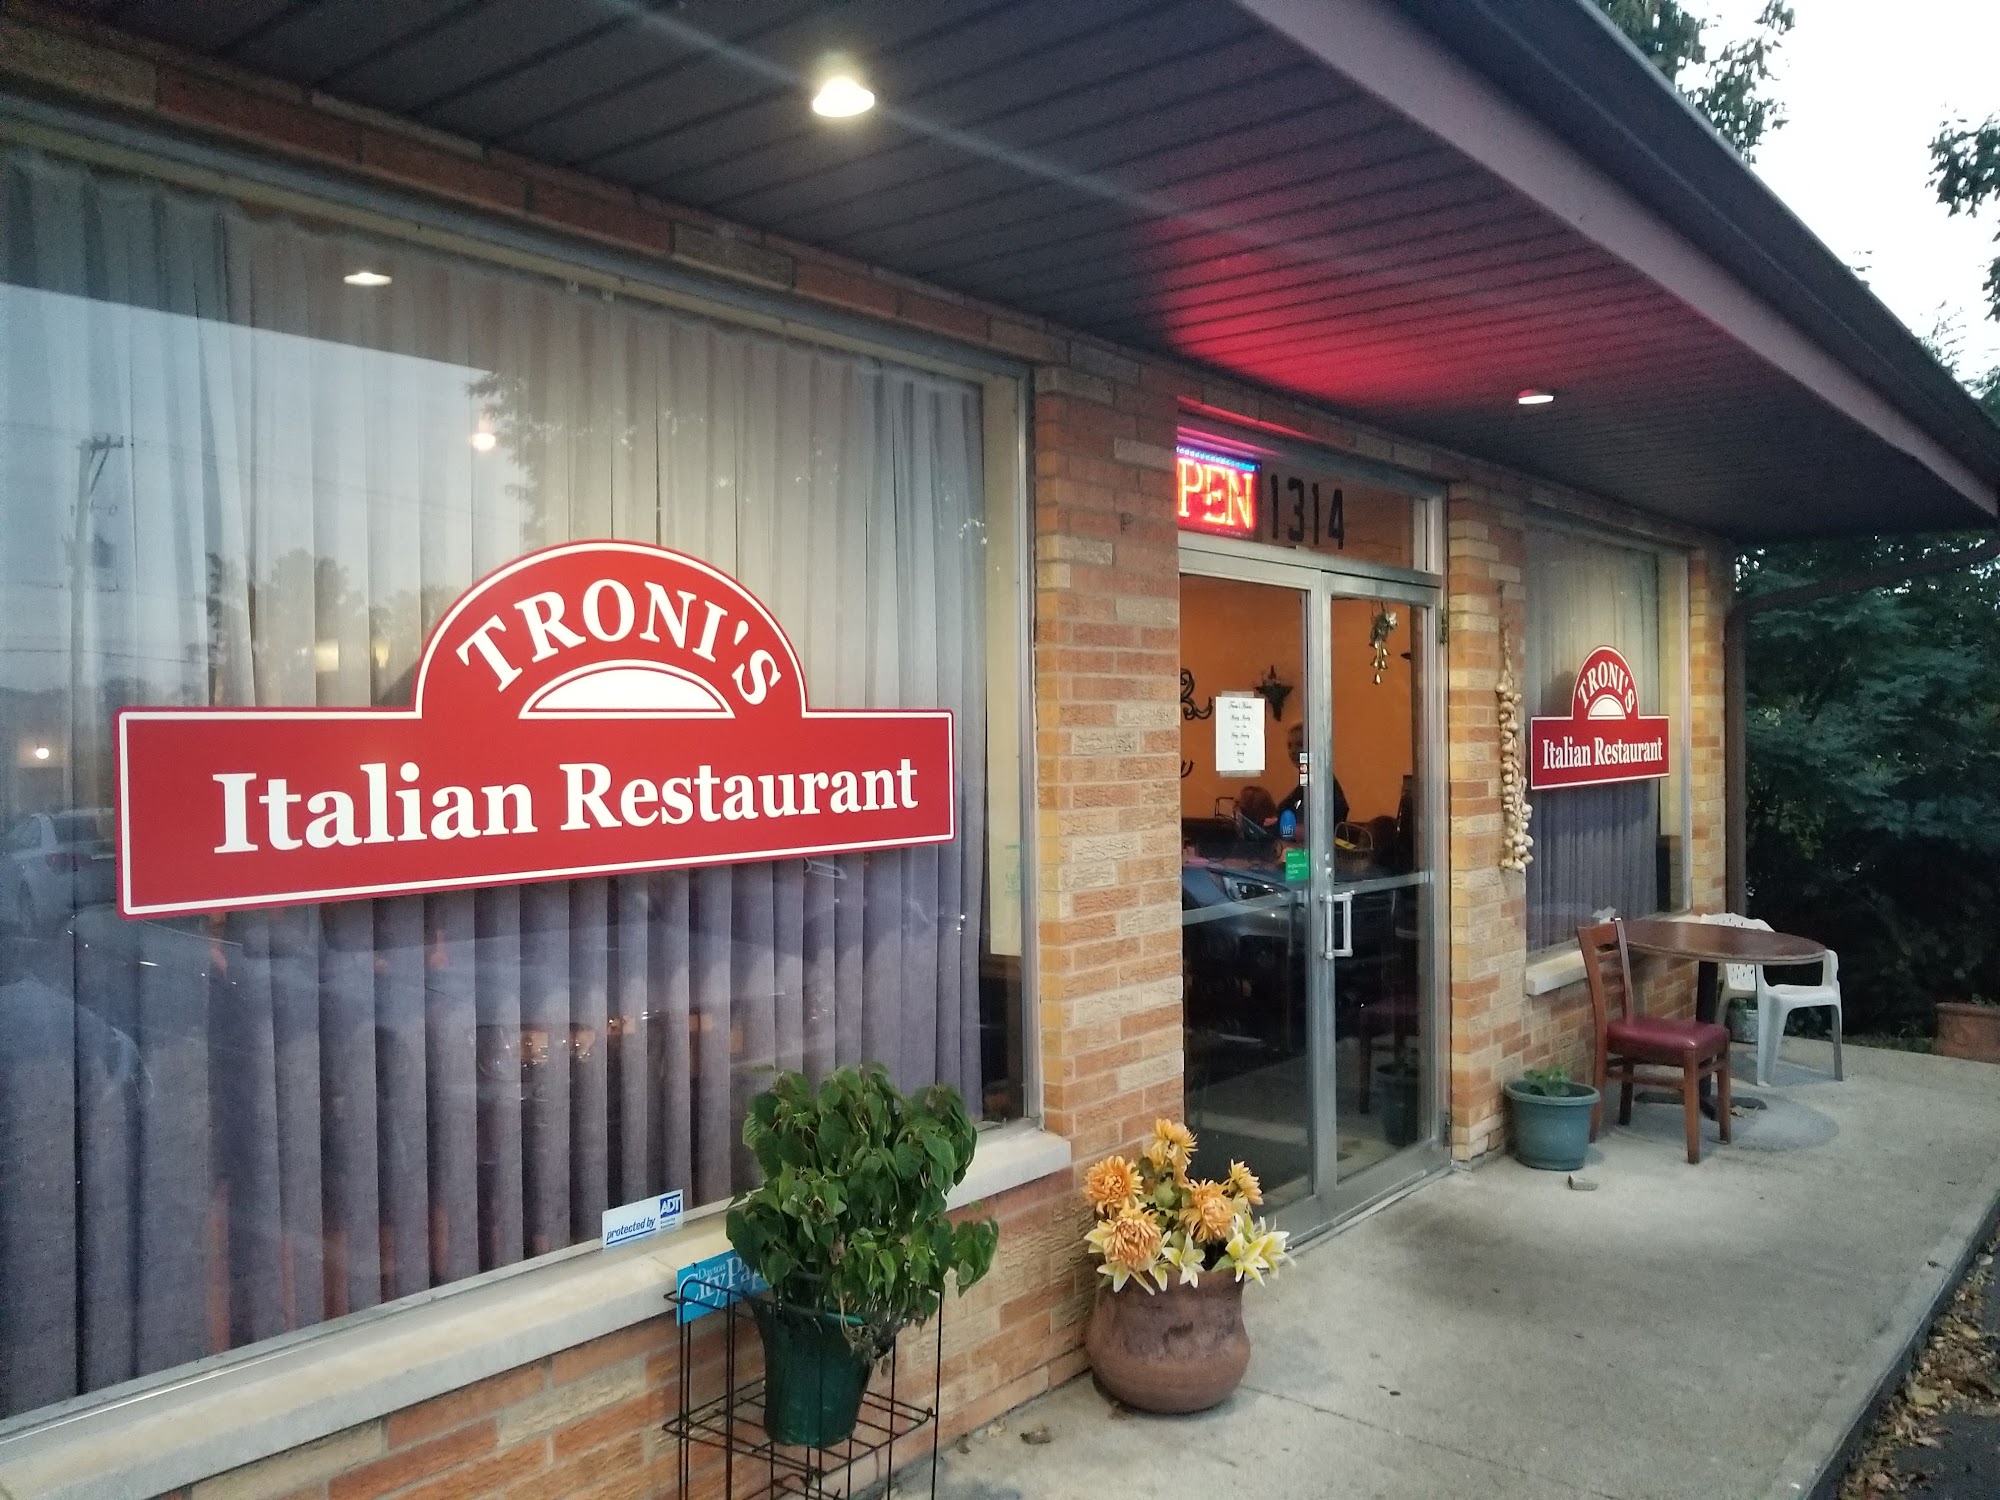 Troni's Italian Restaurant